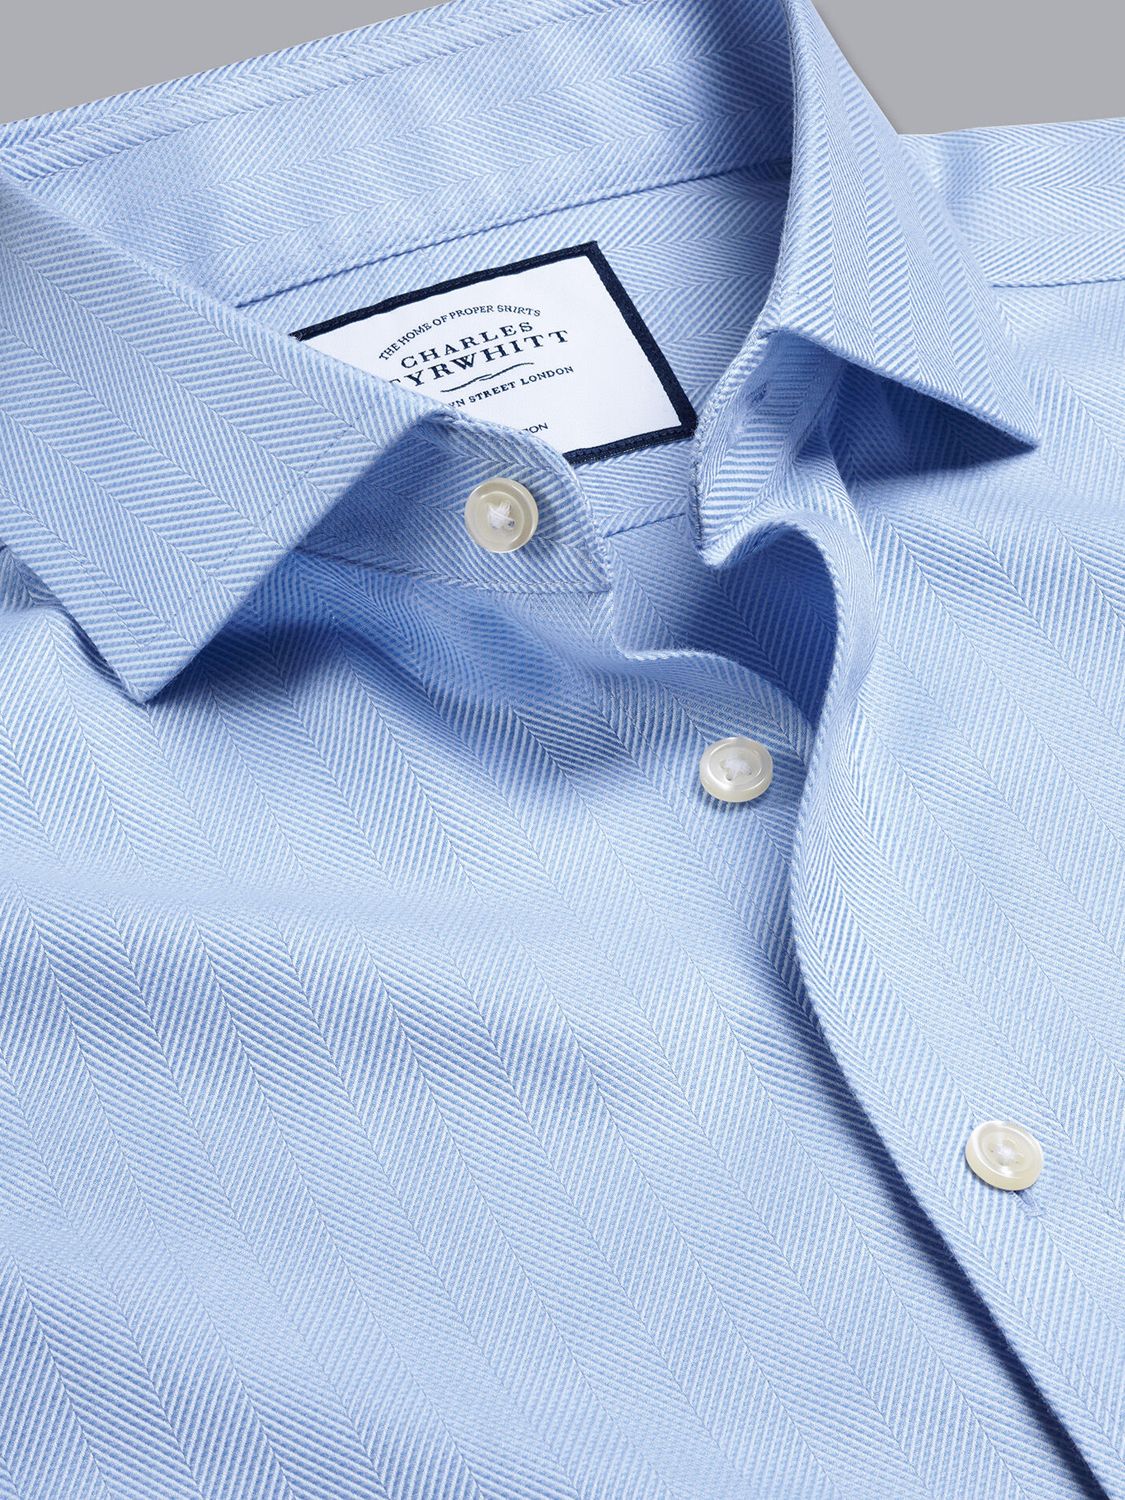 Charles Tyrwhitt Cutaway Collar Non Iron Herringbone Shirt, Sky Blue, Collar size: 15.5", Sleeve length: 34"